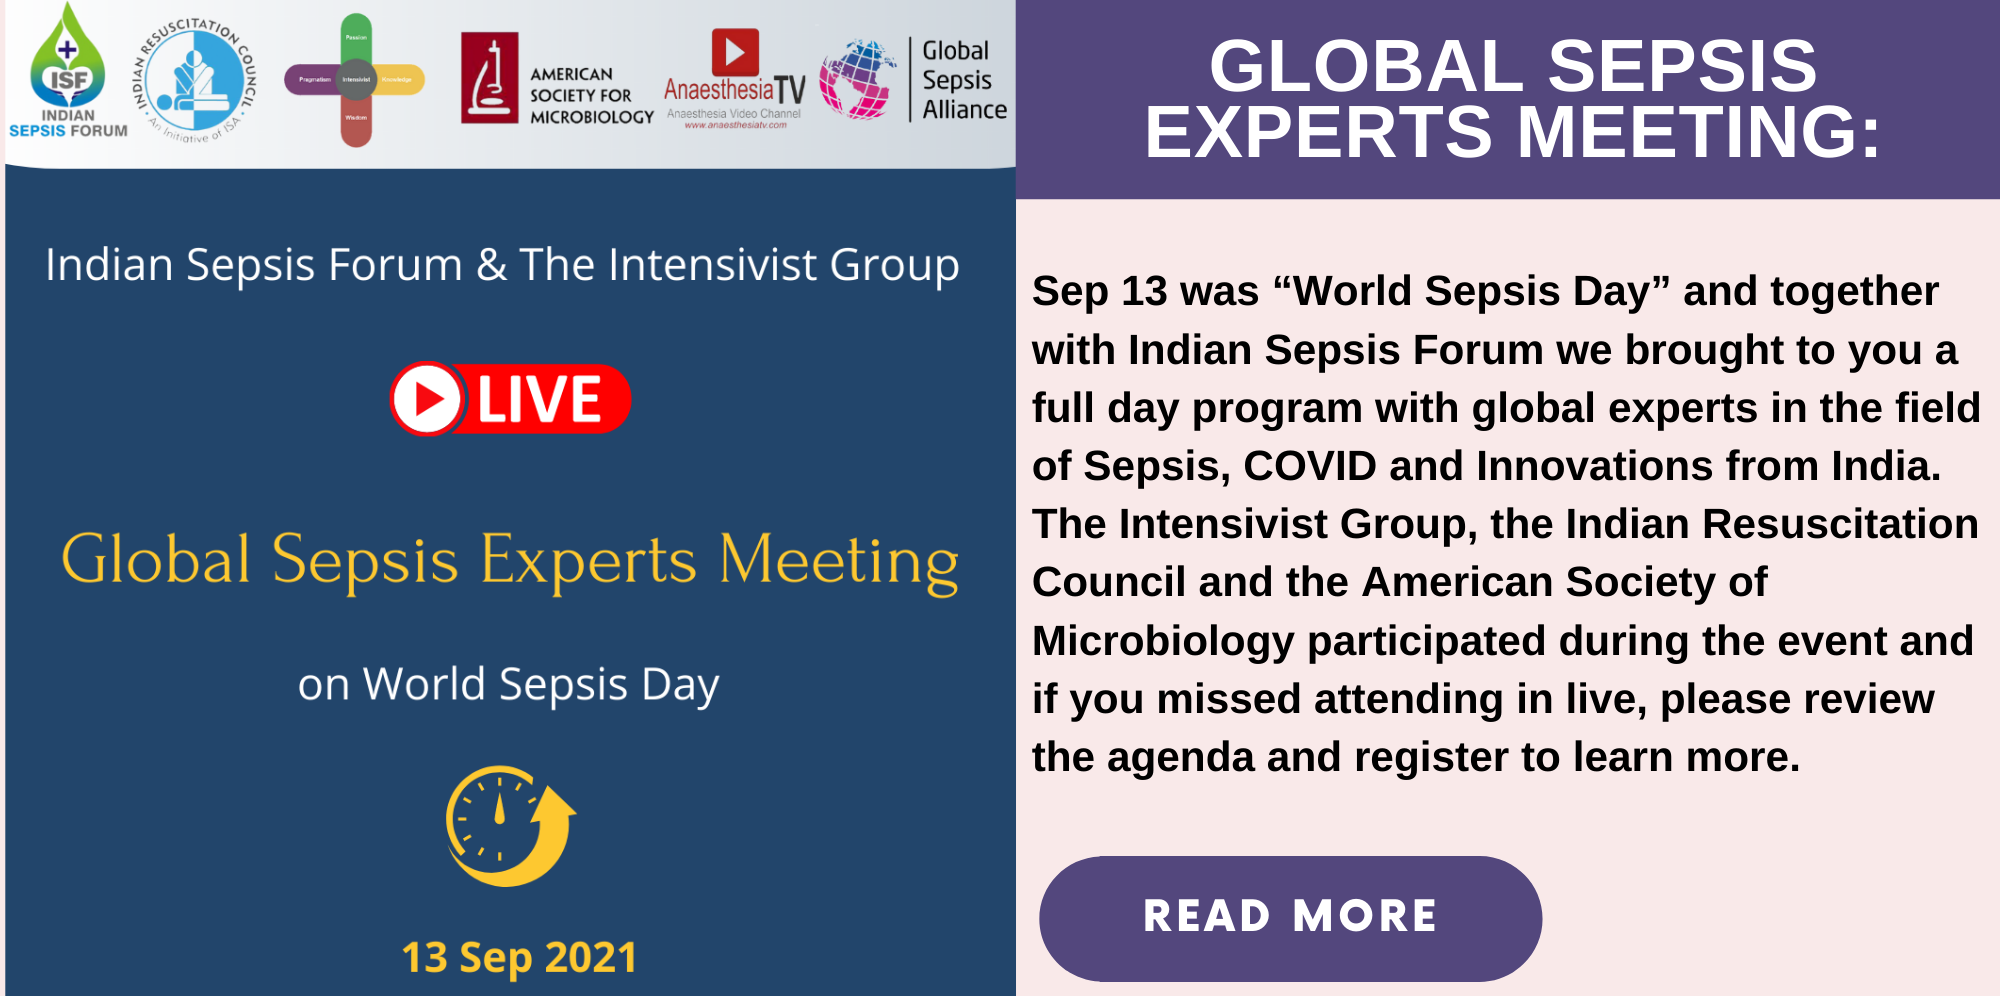 Global Sepsis Experts Meeting